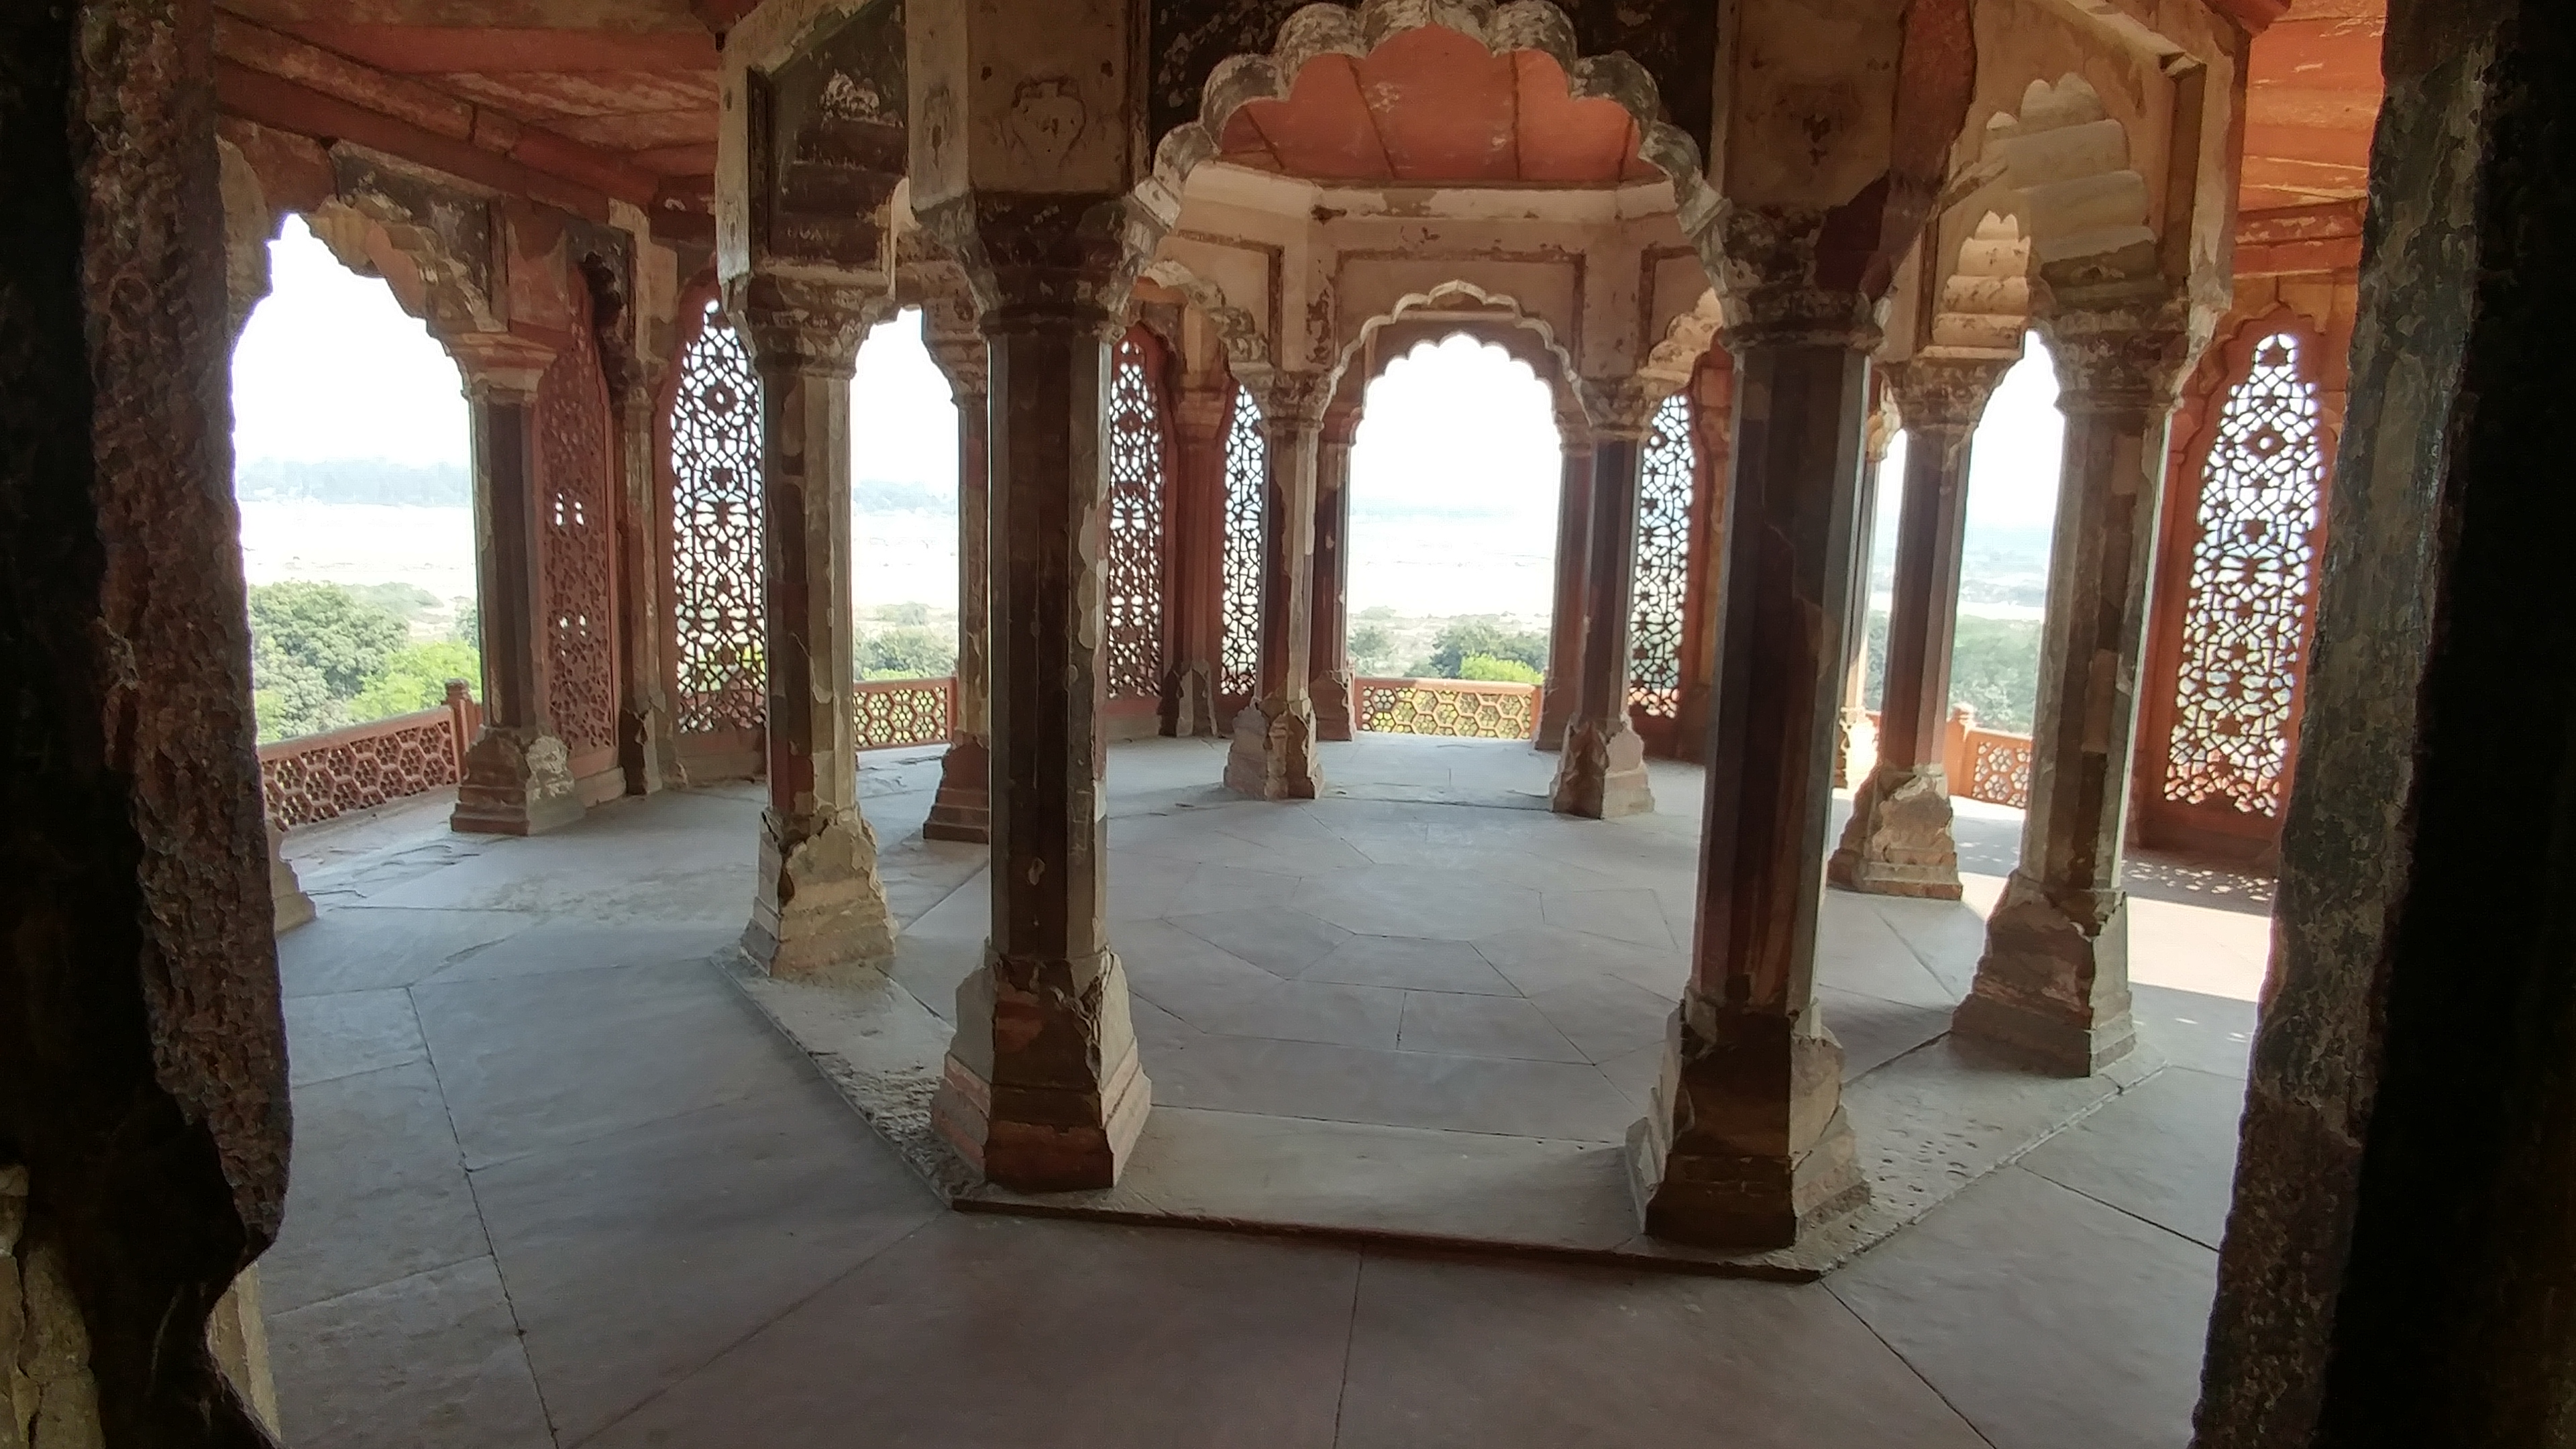 Agra Fort - Sun room